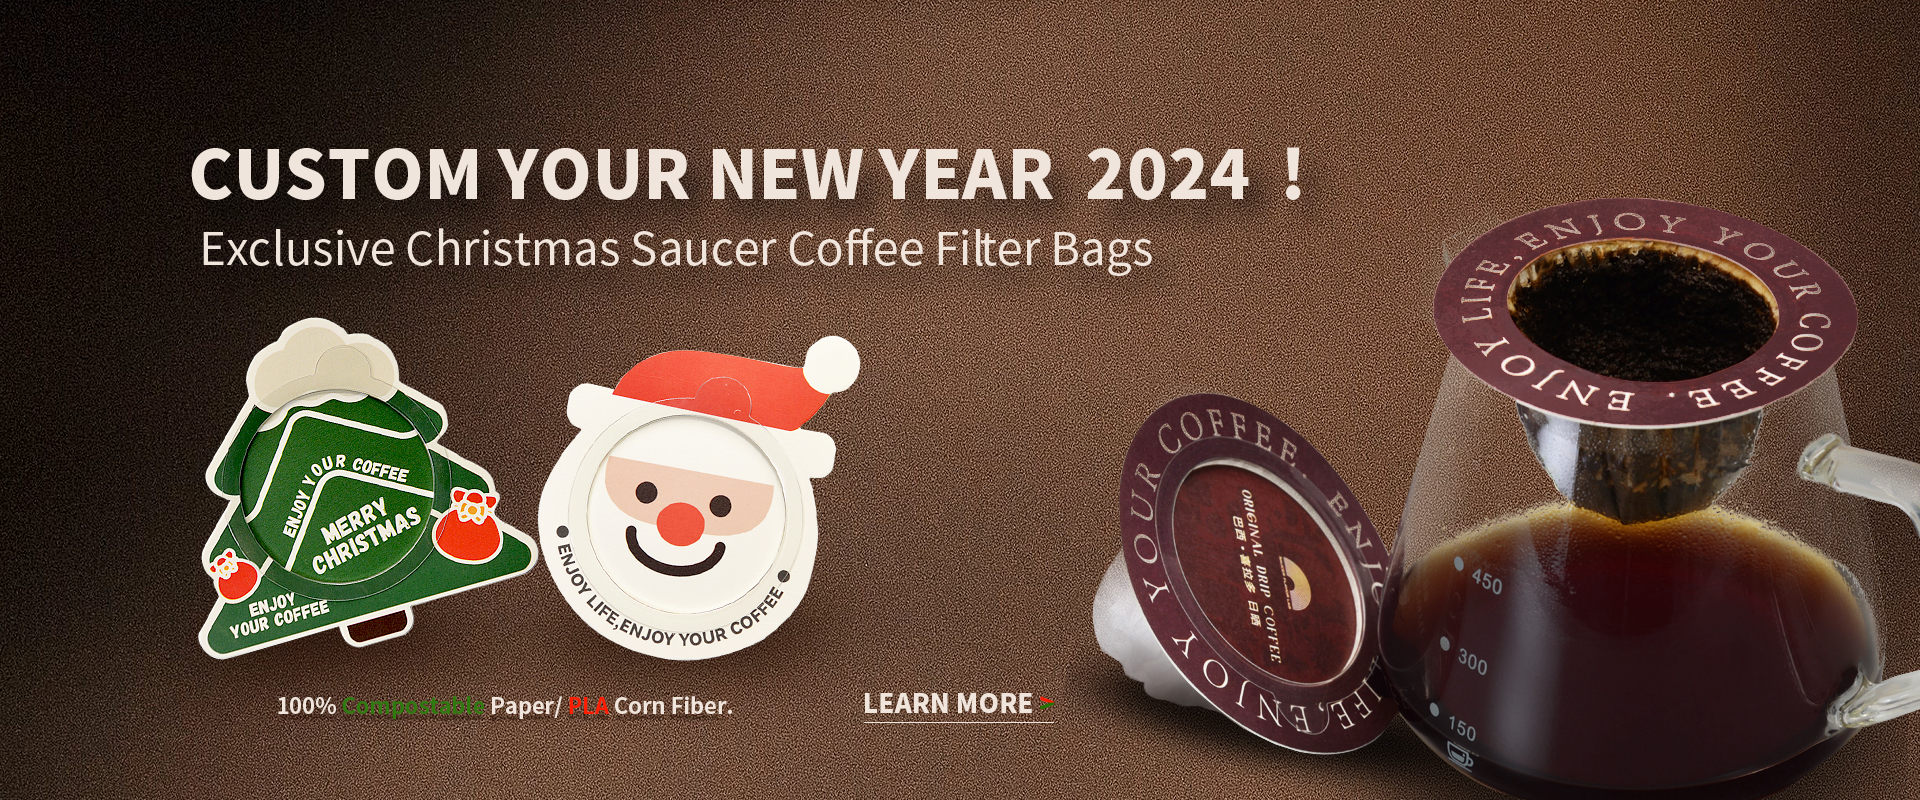 https://www.coffeeteabag.com/chritmas-fedora-eco-freundliche-saucer-drip-coffee-filter-bag-product/